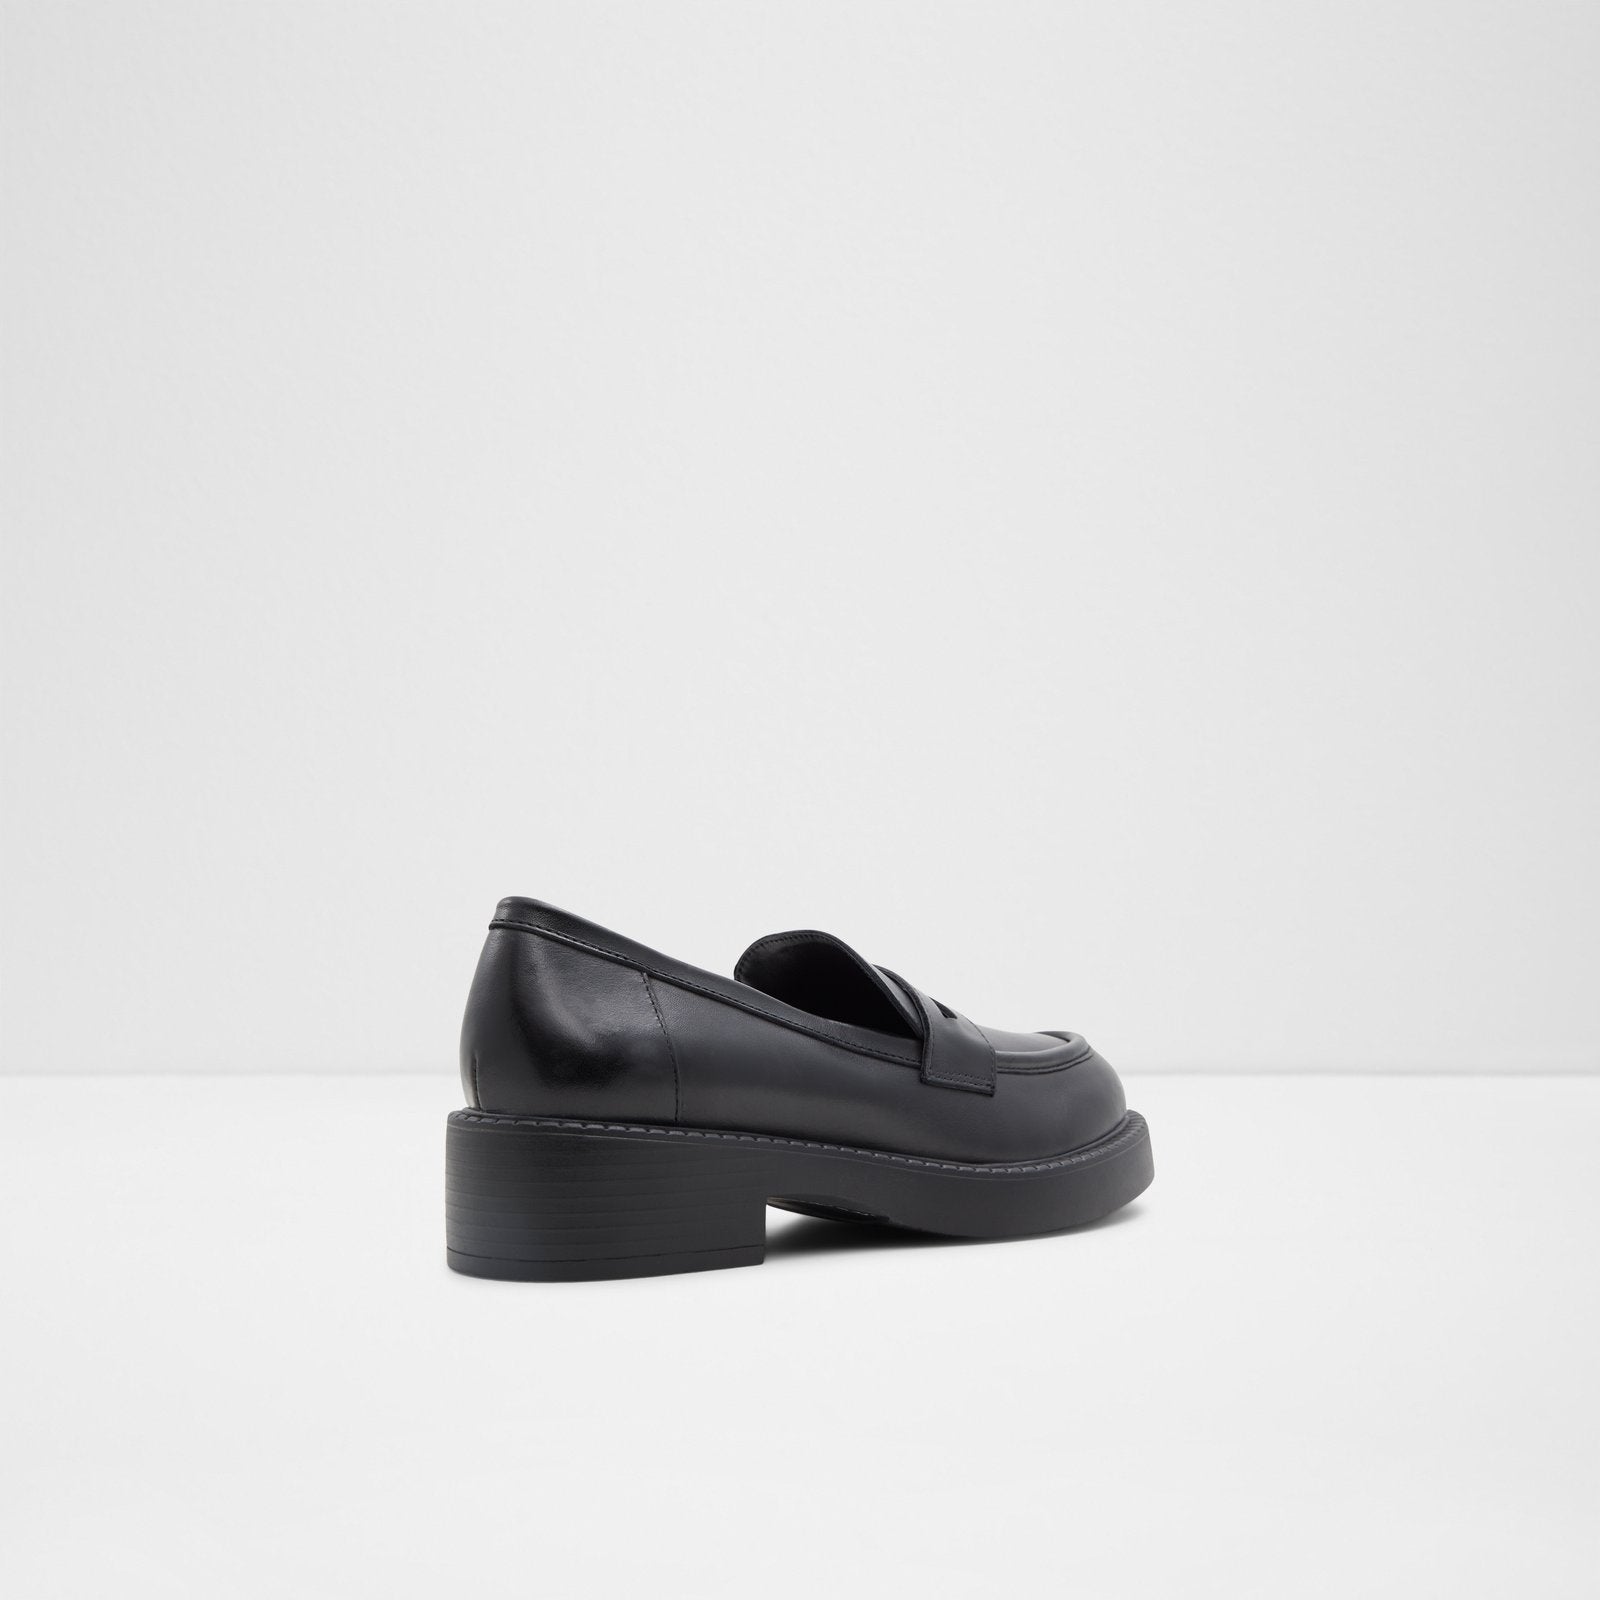 Bigplan / Loafers Women Shoes - Black - ALDO KSA